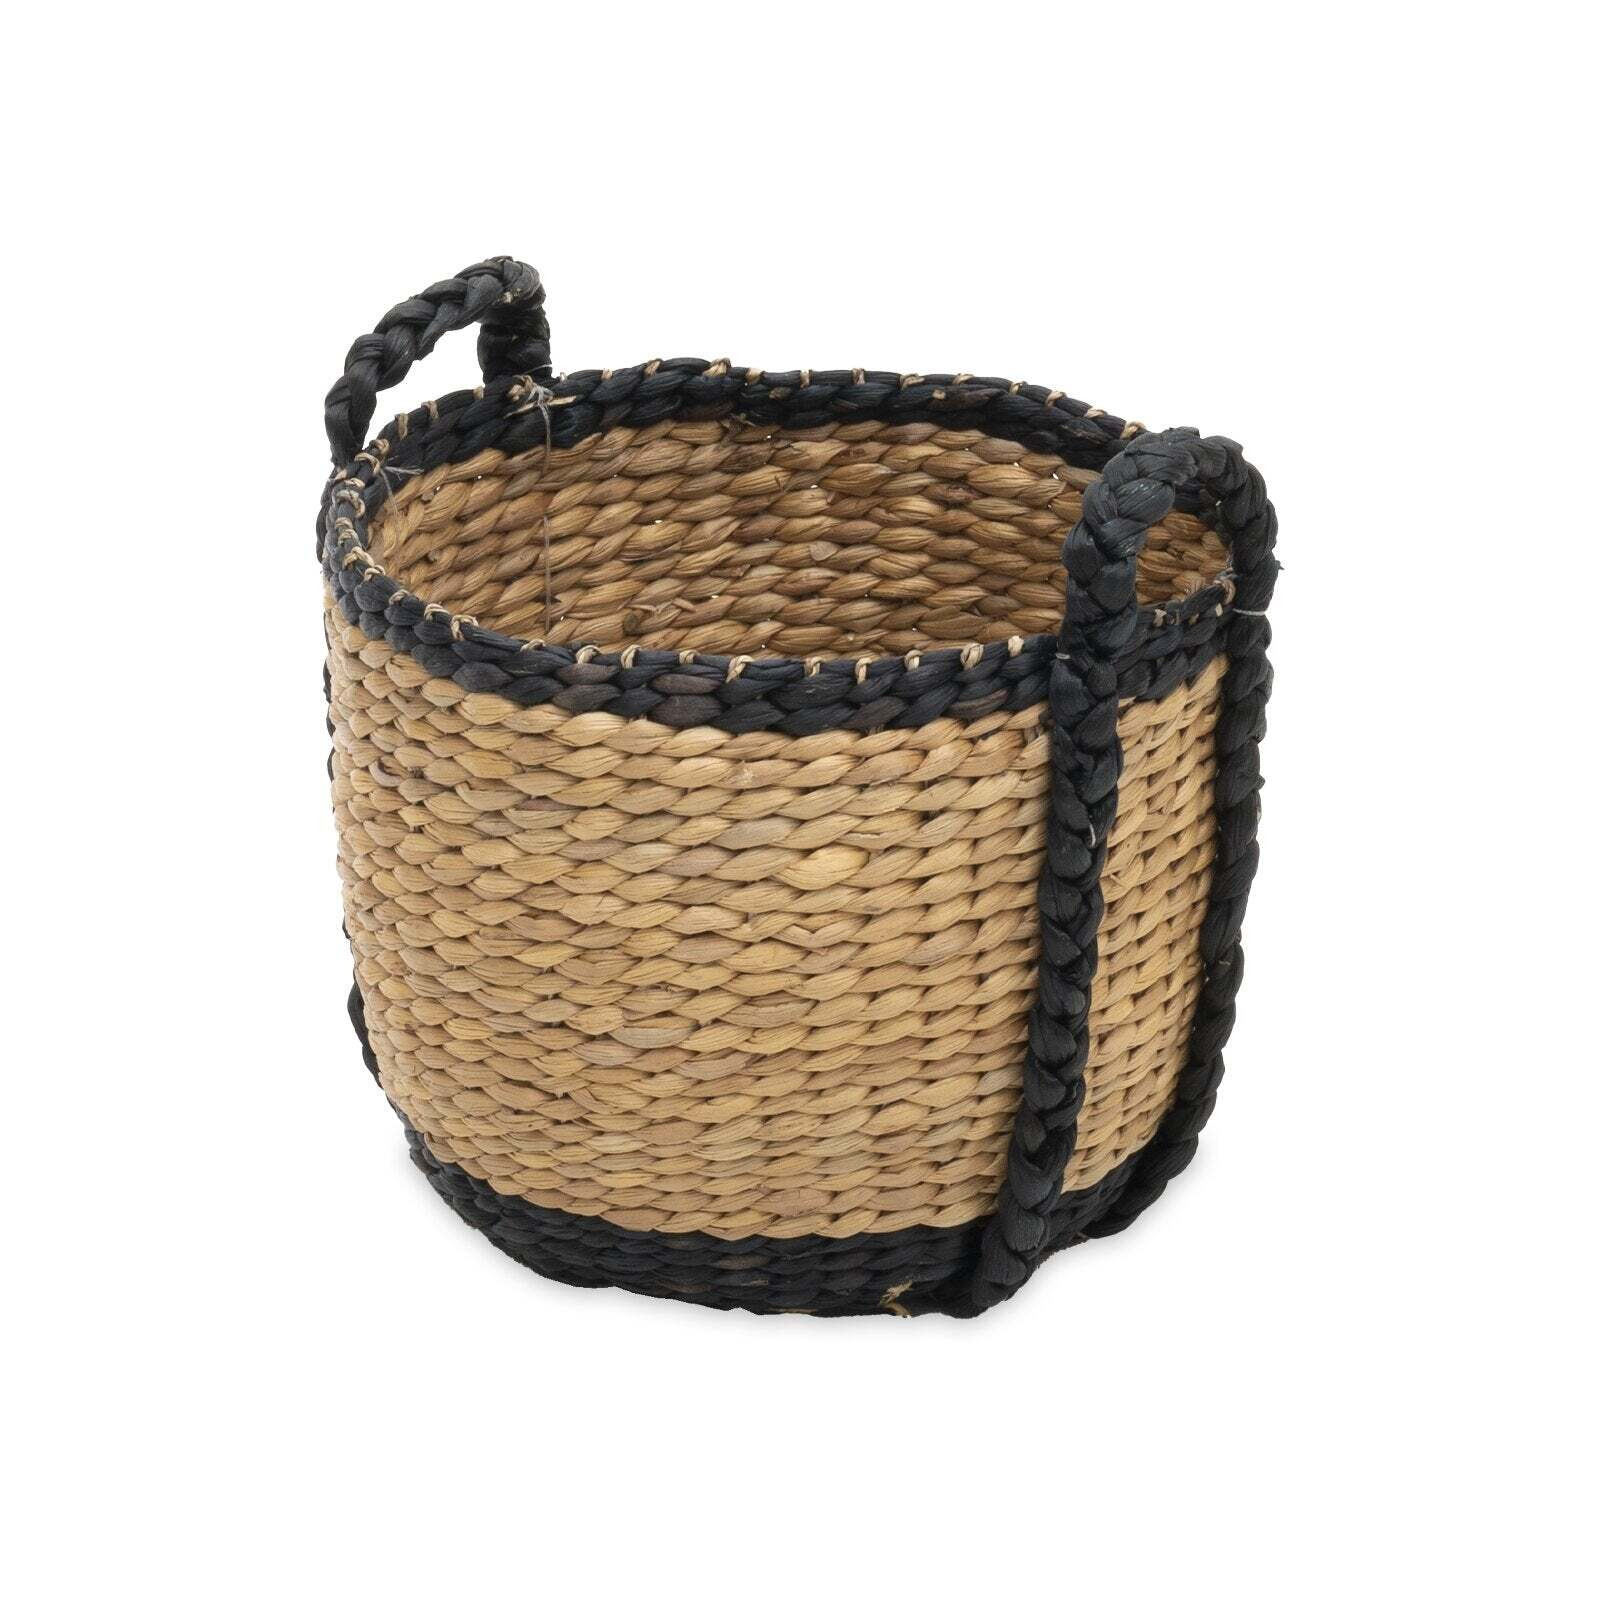 Elizabeth Water Hyacinth Basket, Natural, L